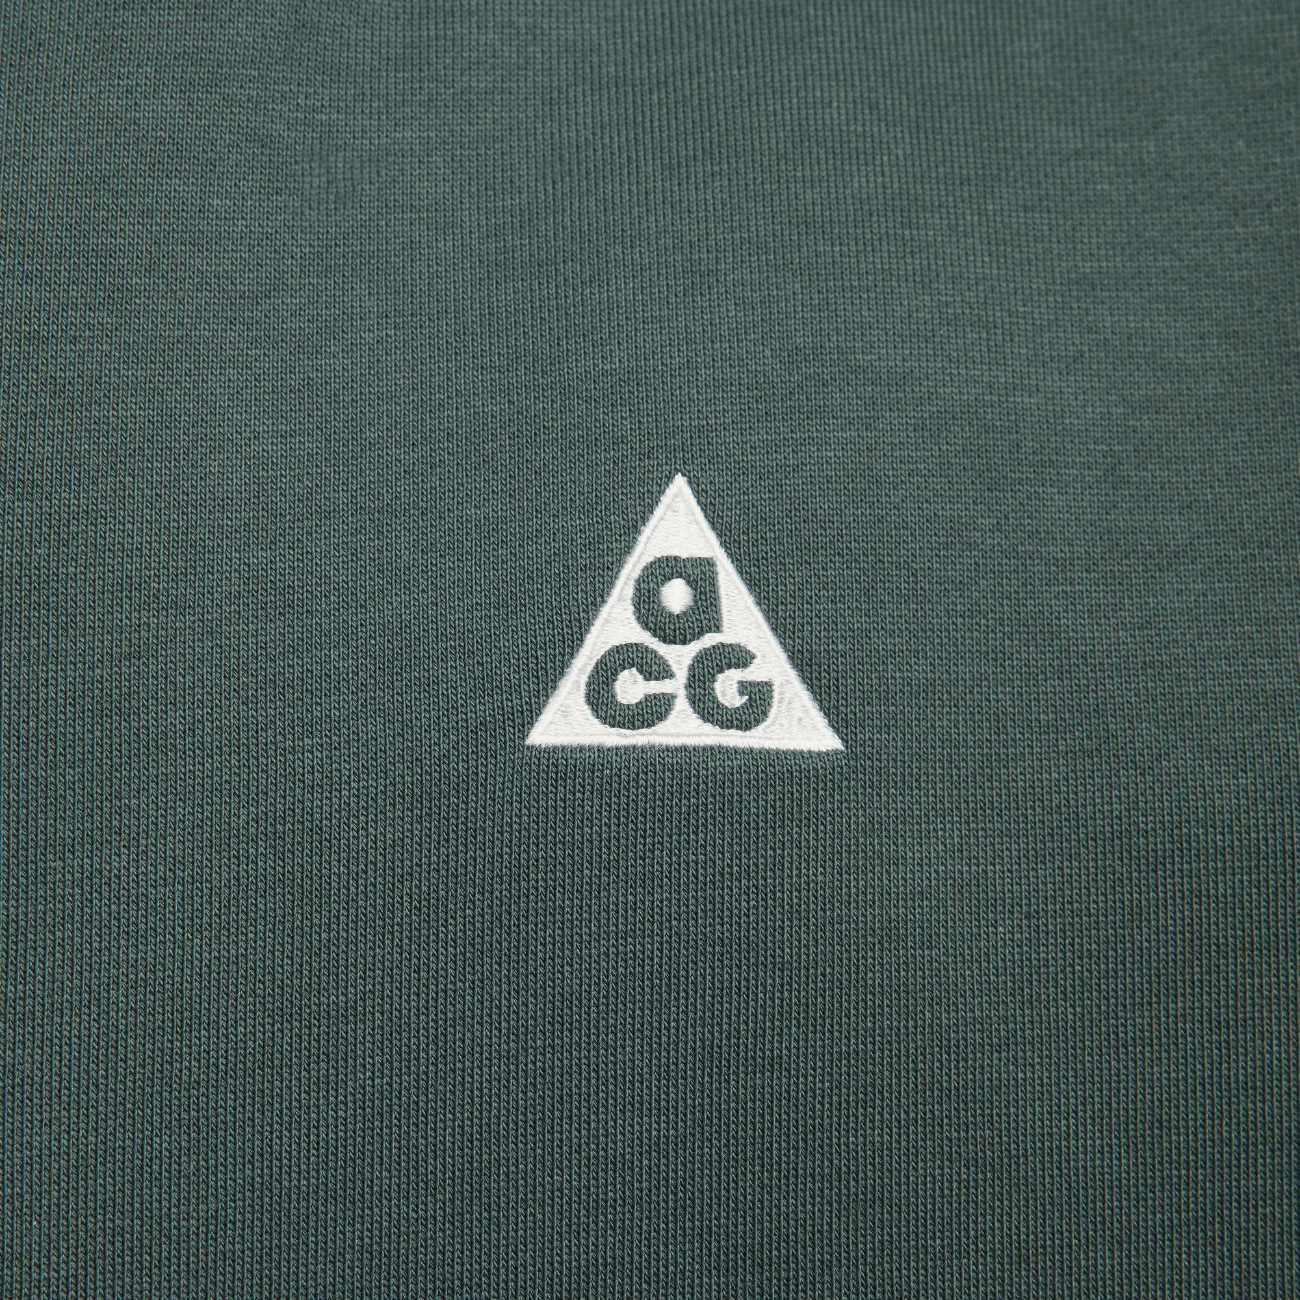 ACG Therma Fit Crew Fleece - Vintage Green/Summit White